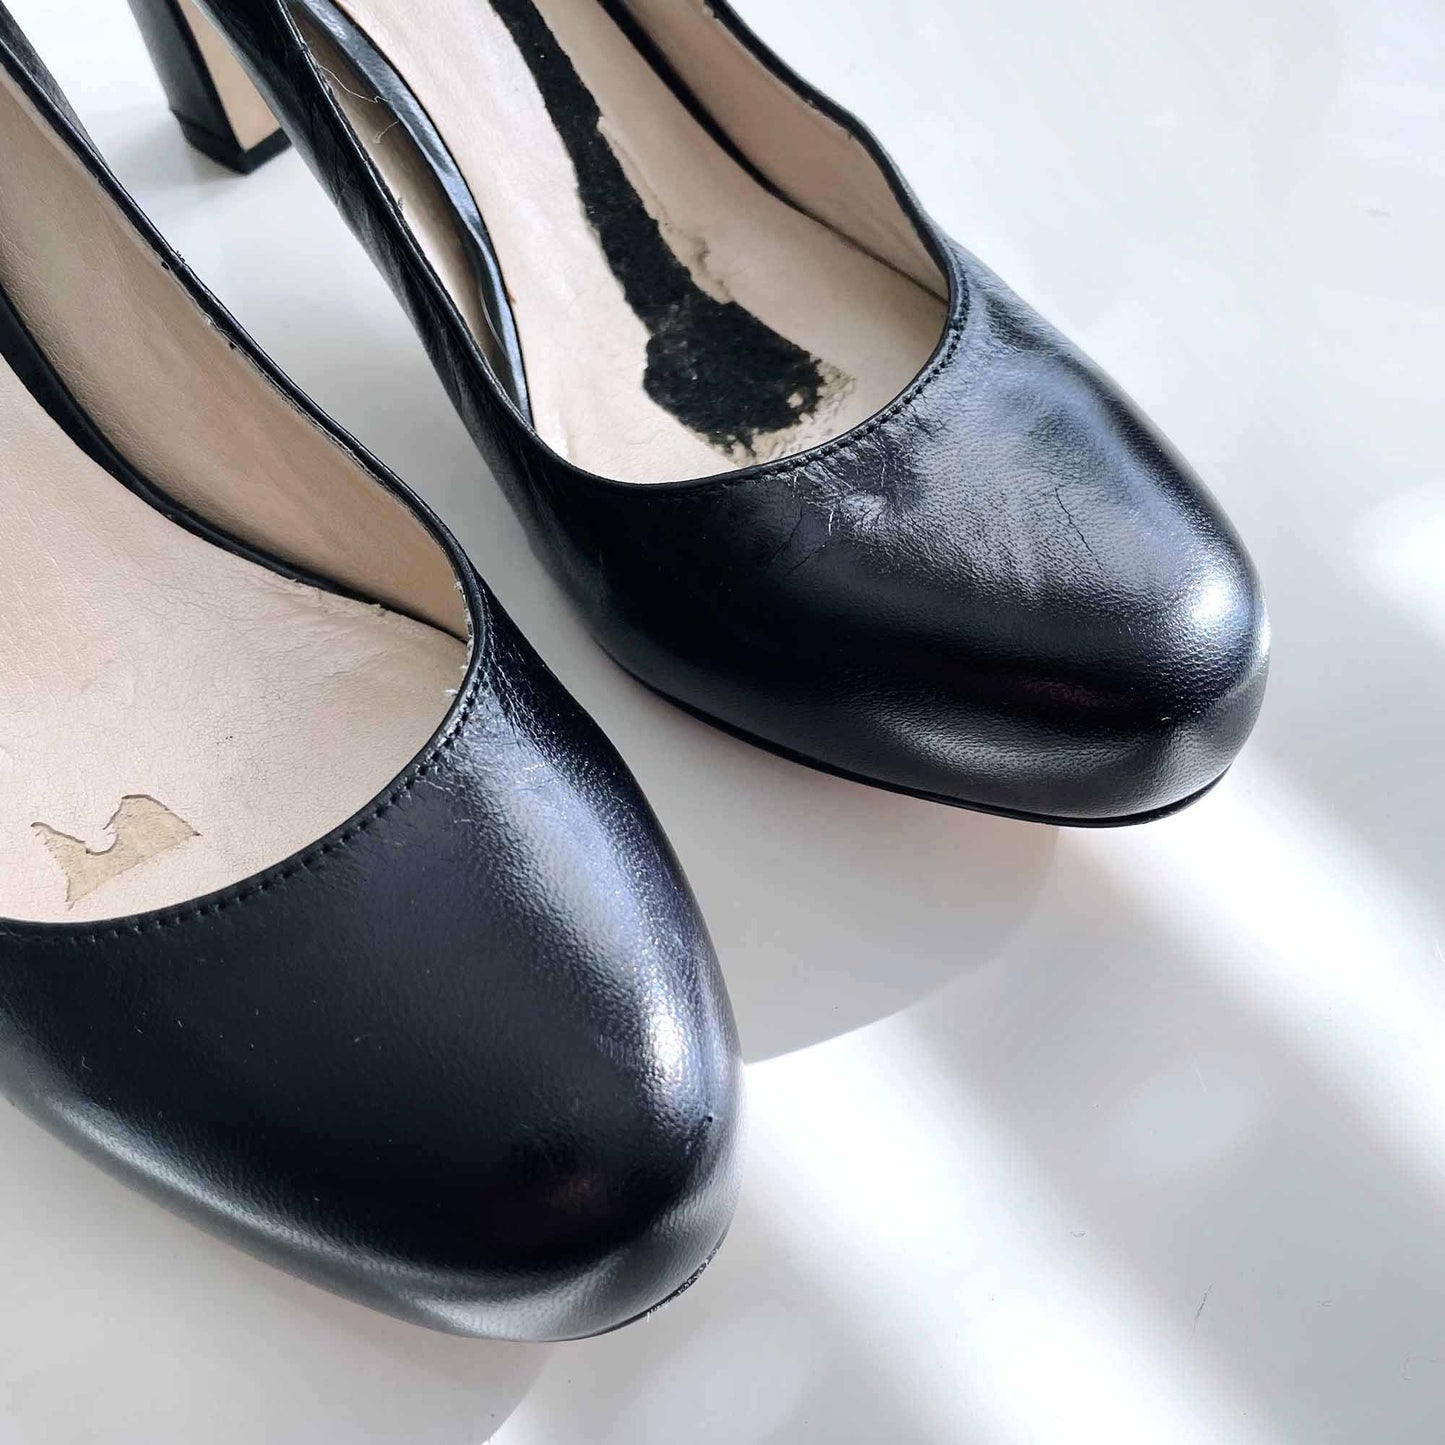 nine west black leather thick heel pumps - size 8.5